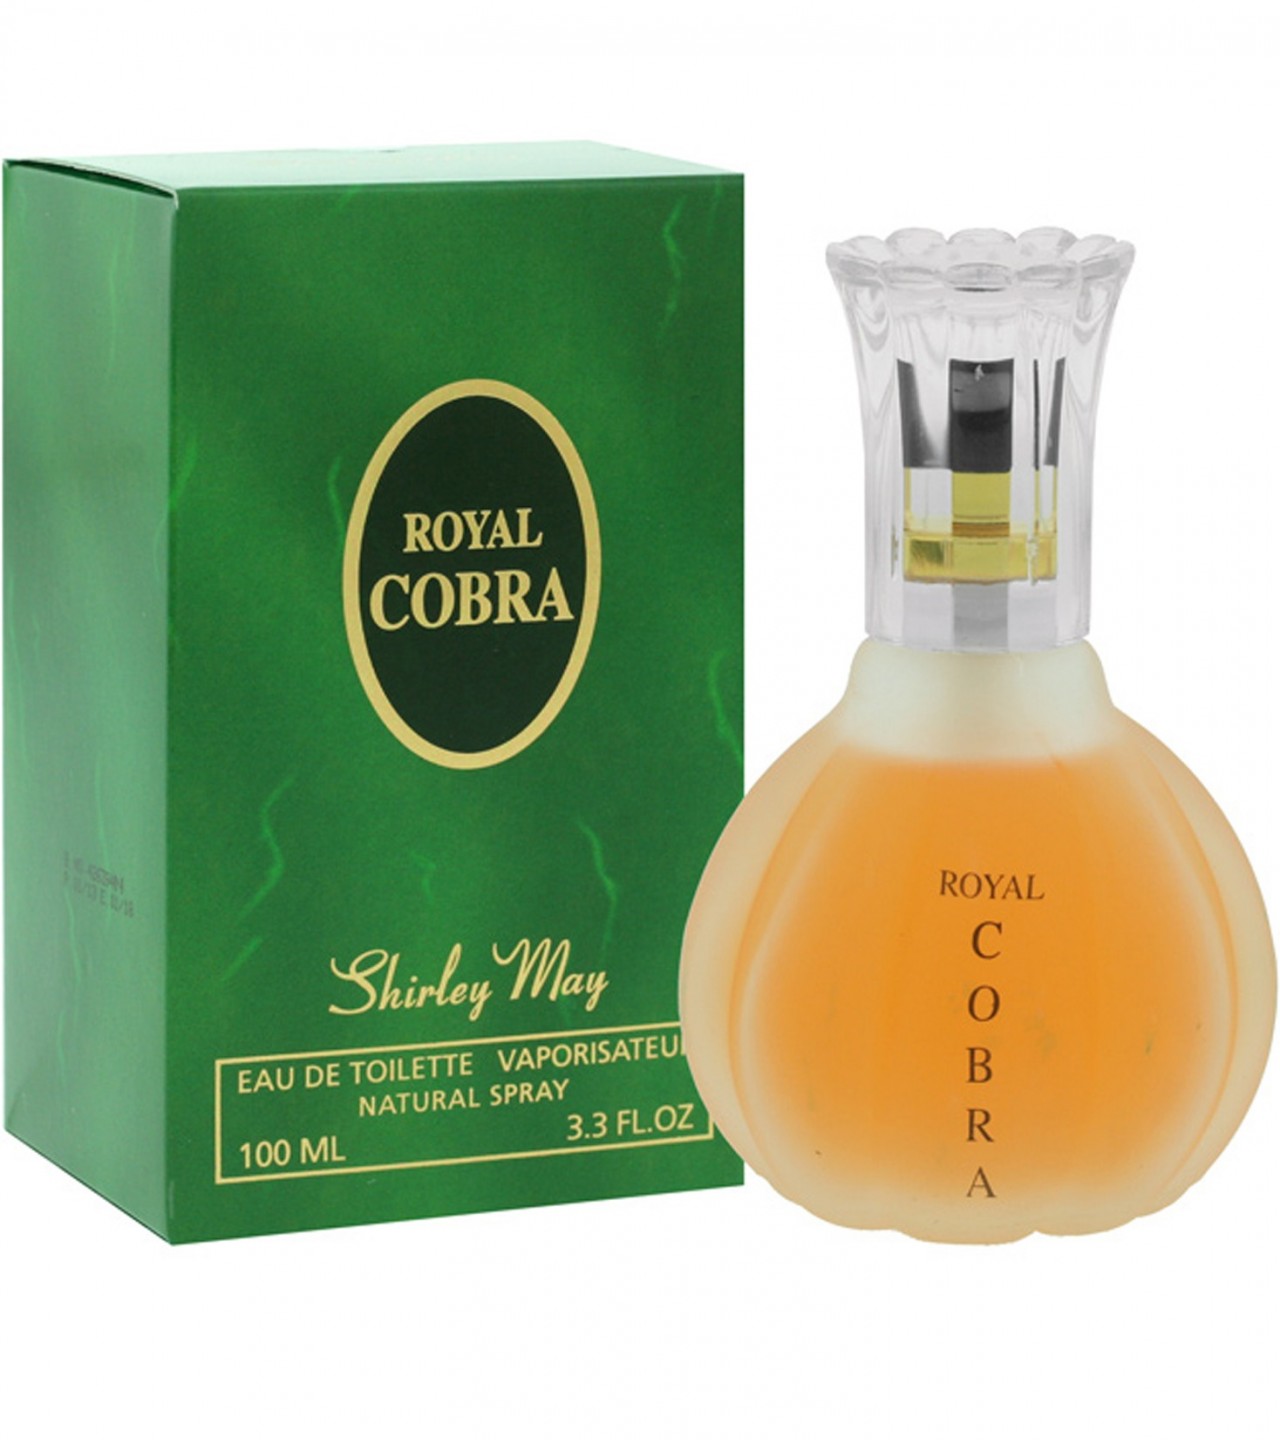 Shirley May Royal Cobra Perfume For Unisex - 100 ml